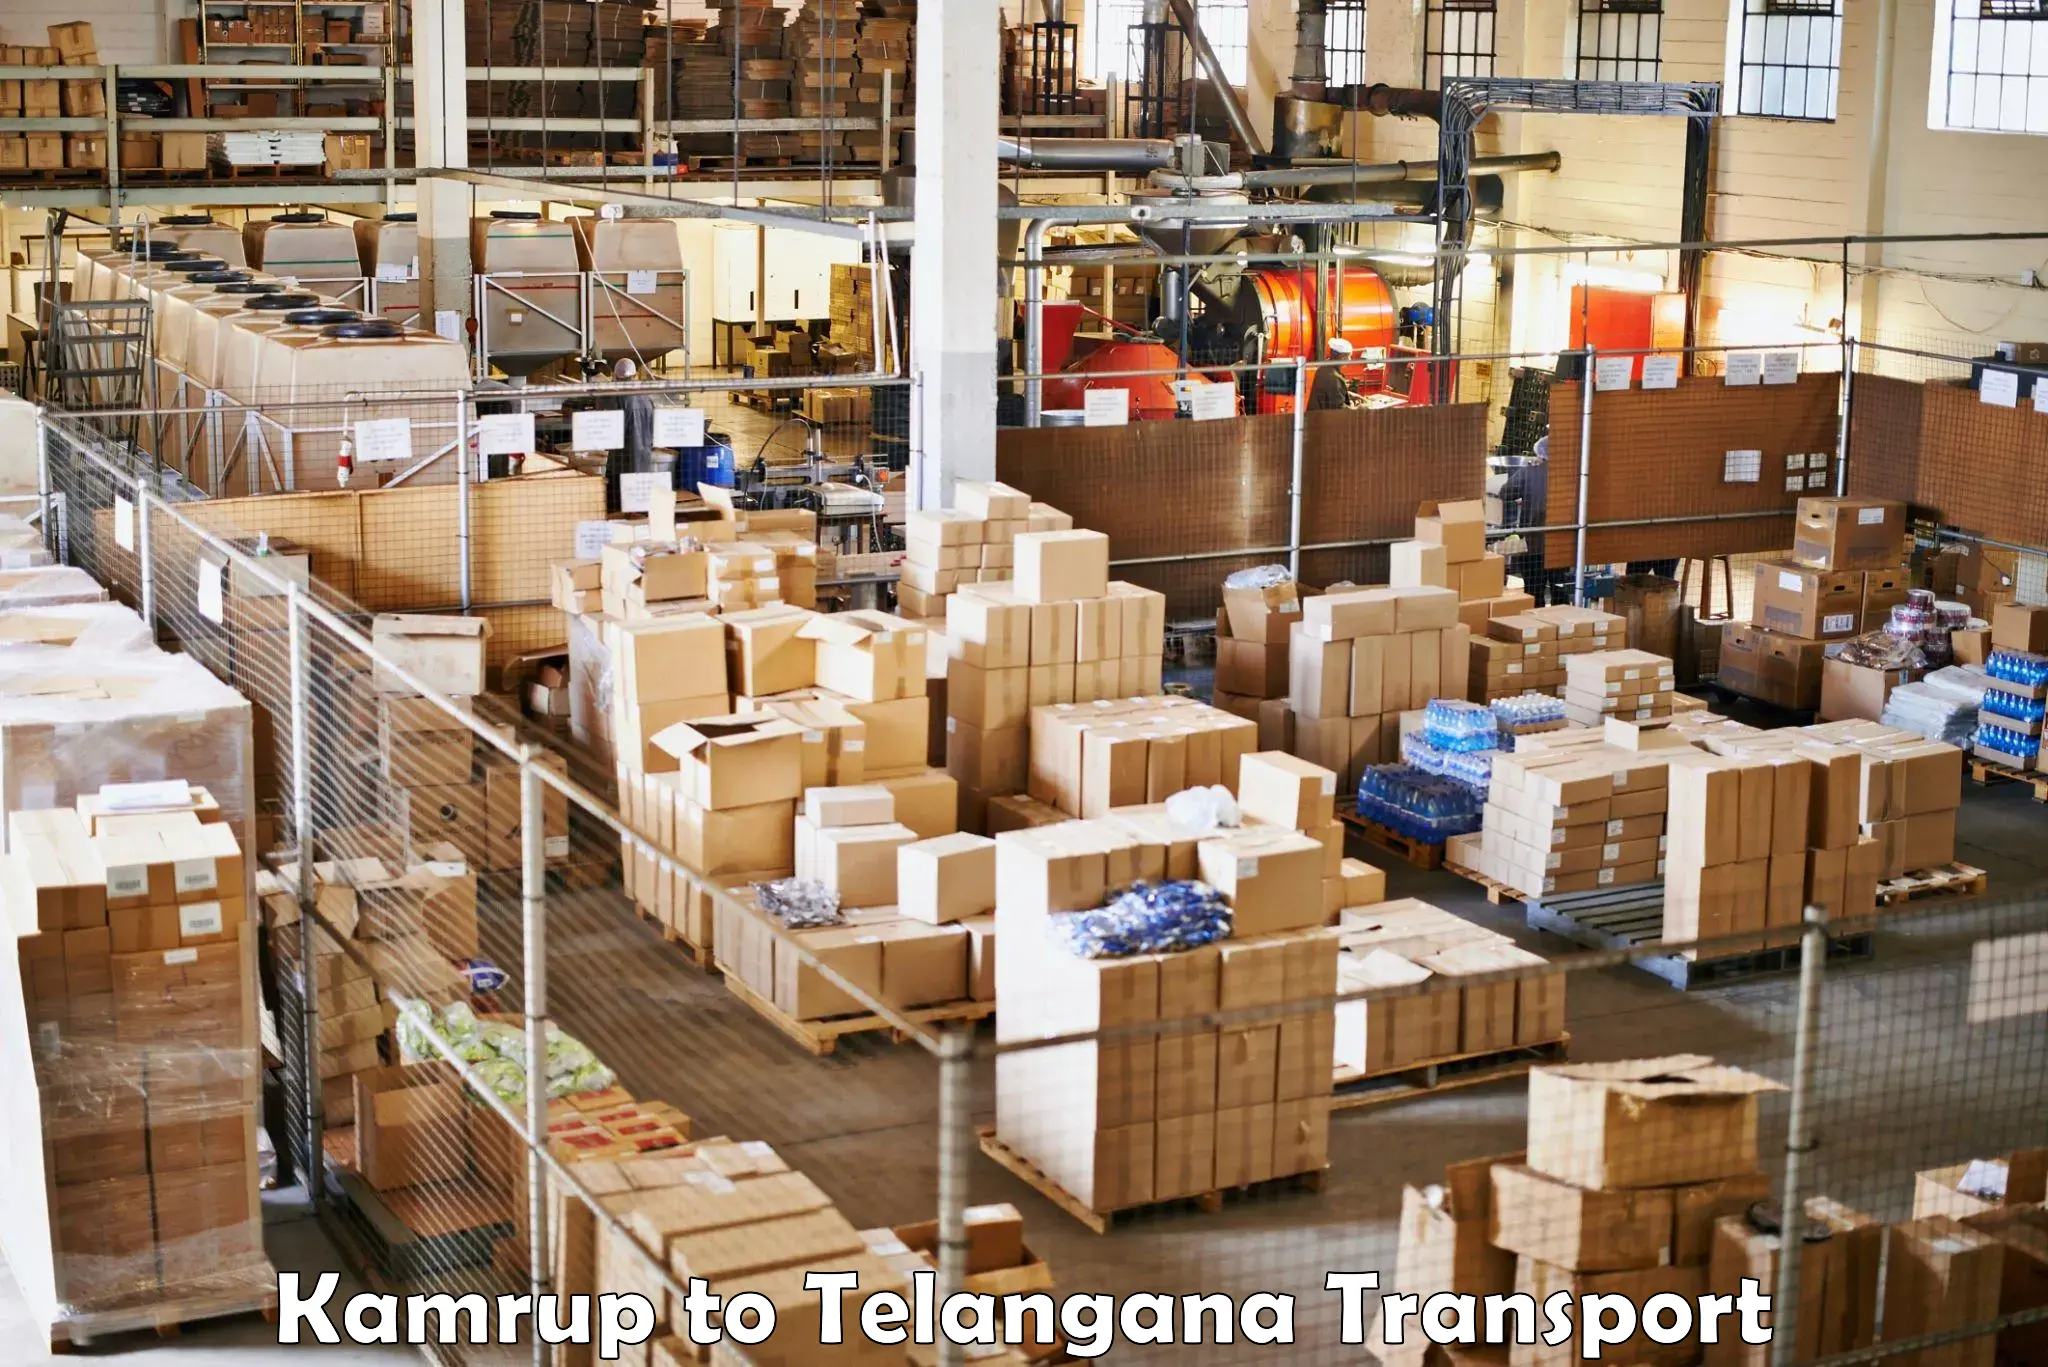 Delivery service Kamrup to Pathipaka